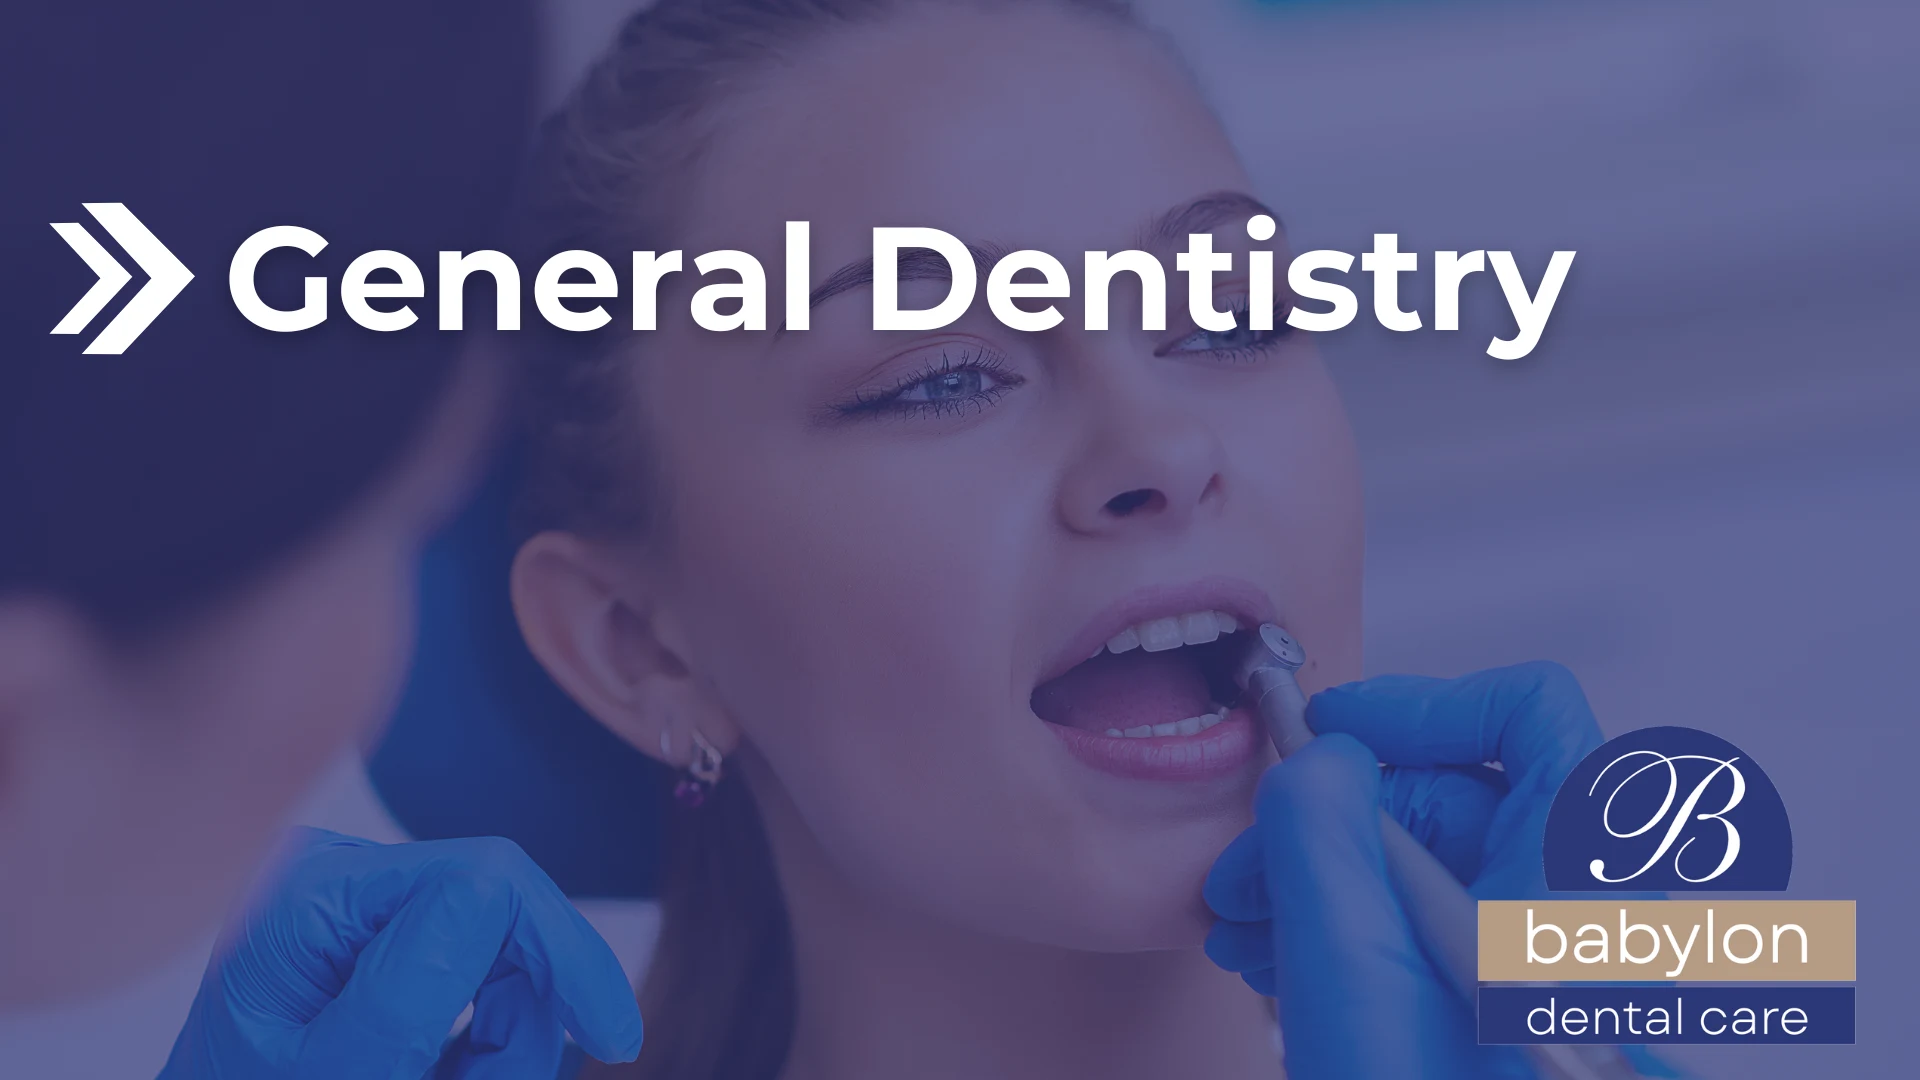 General Dentistry Image - new logo